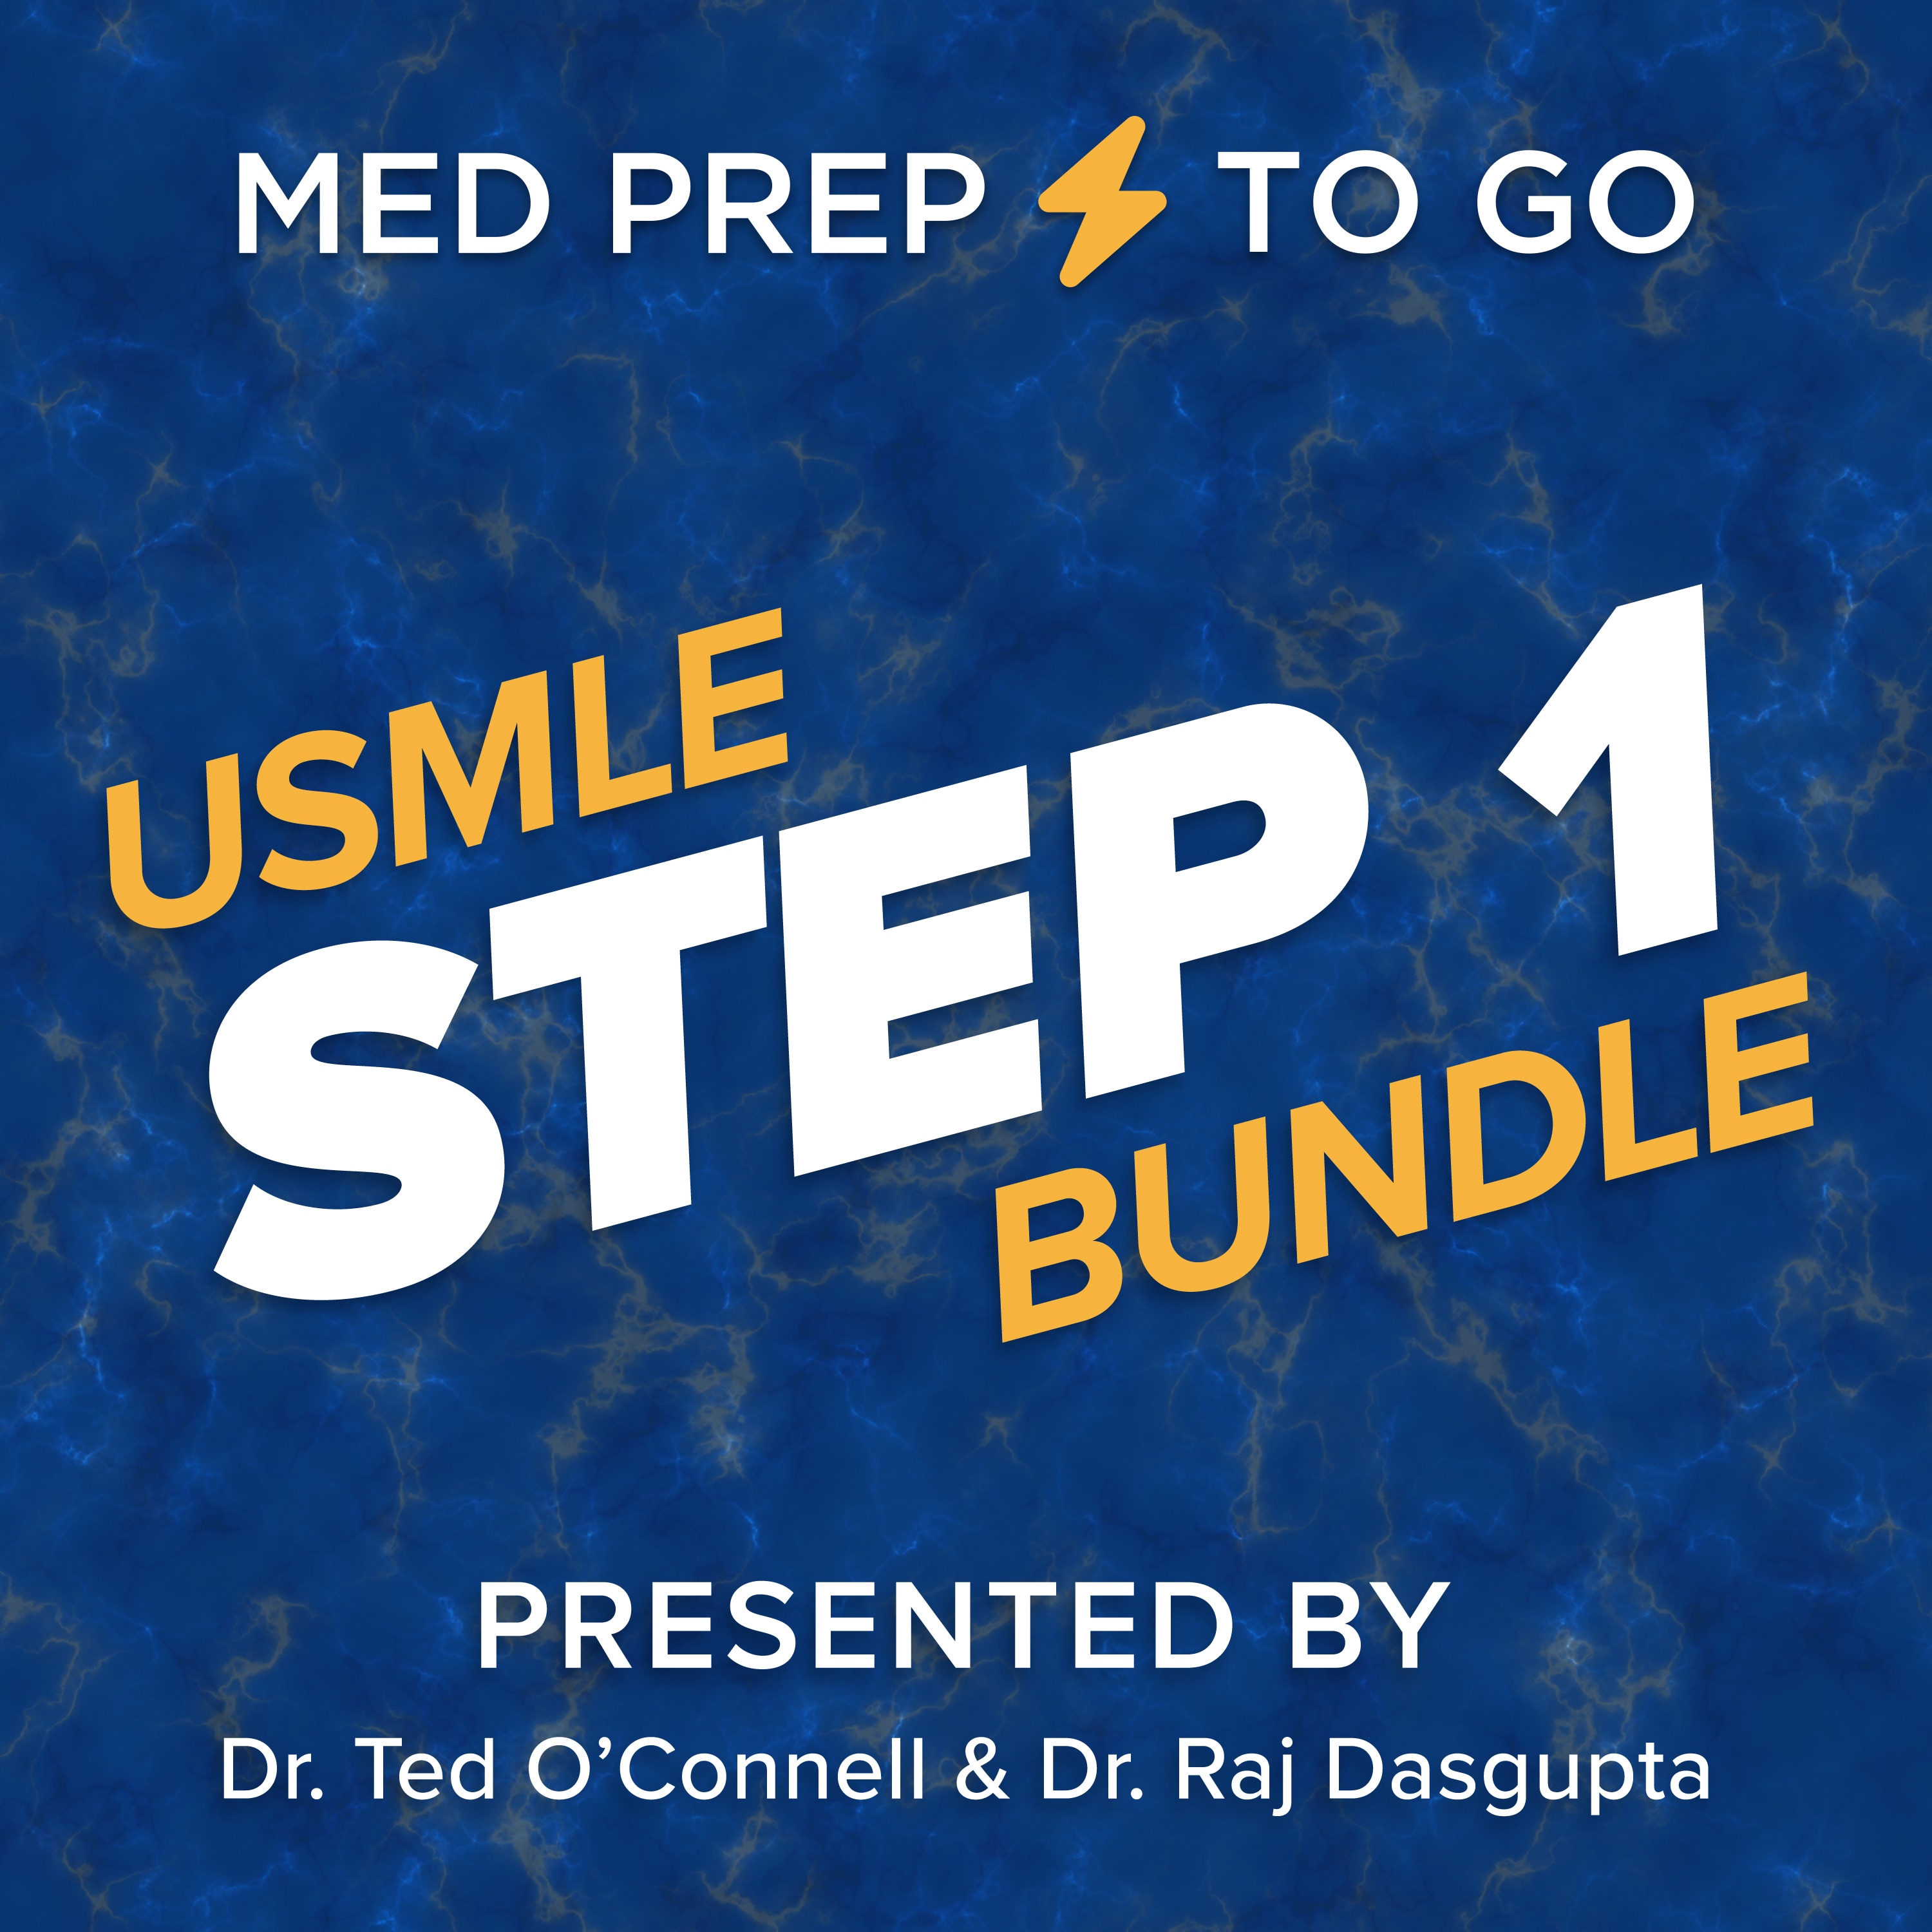 MedPrepToGo: USMLE Step 3 Review podcast cover art